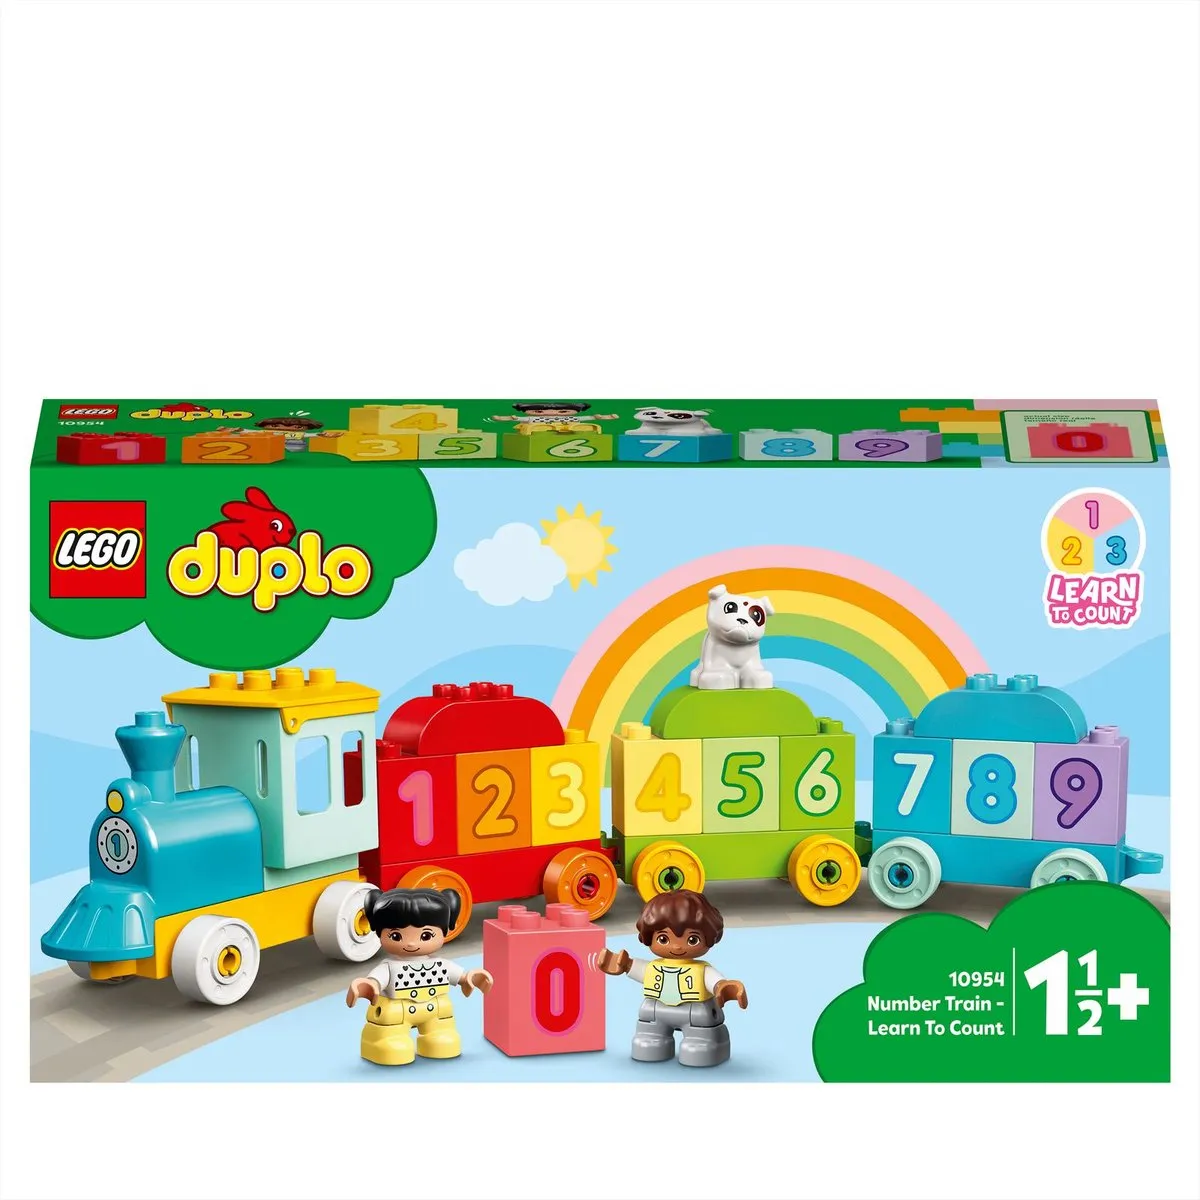 LEGO DUPLO Getallentrein Leren Tellen - 10954 speelgoed